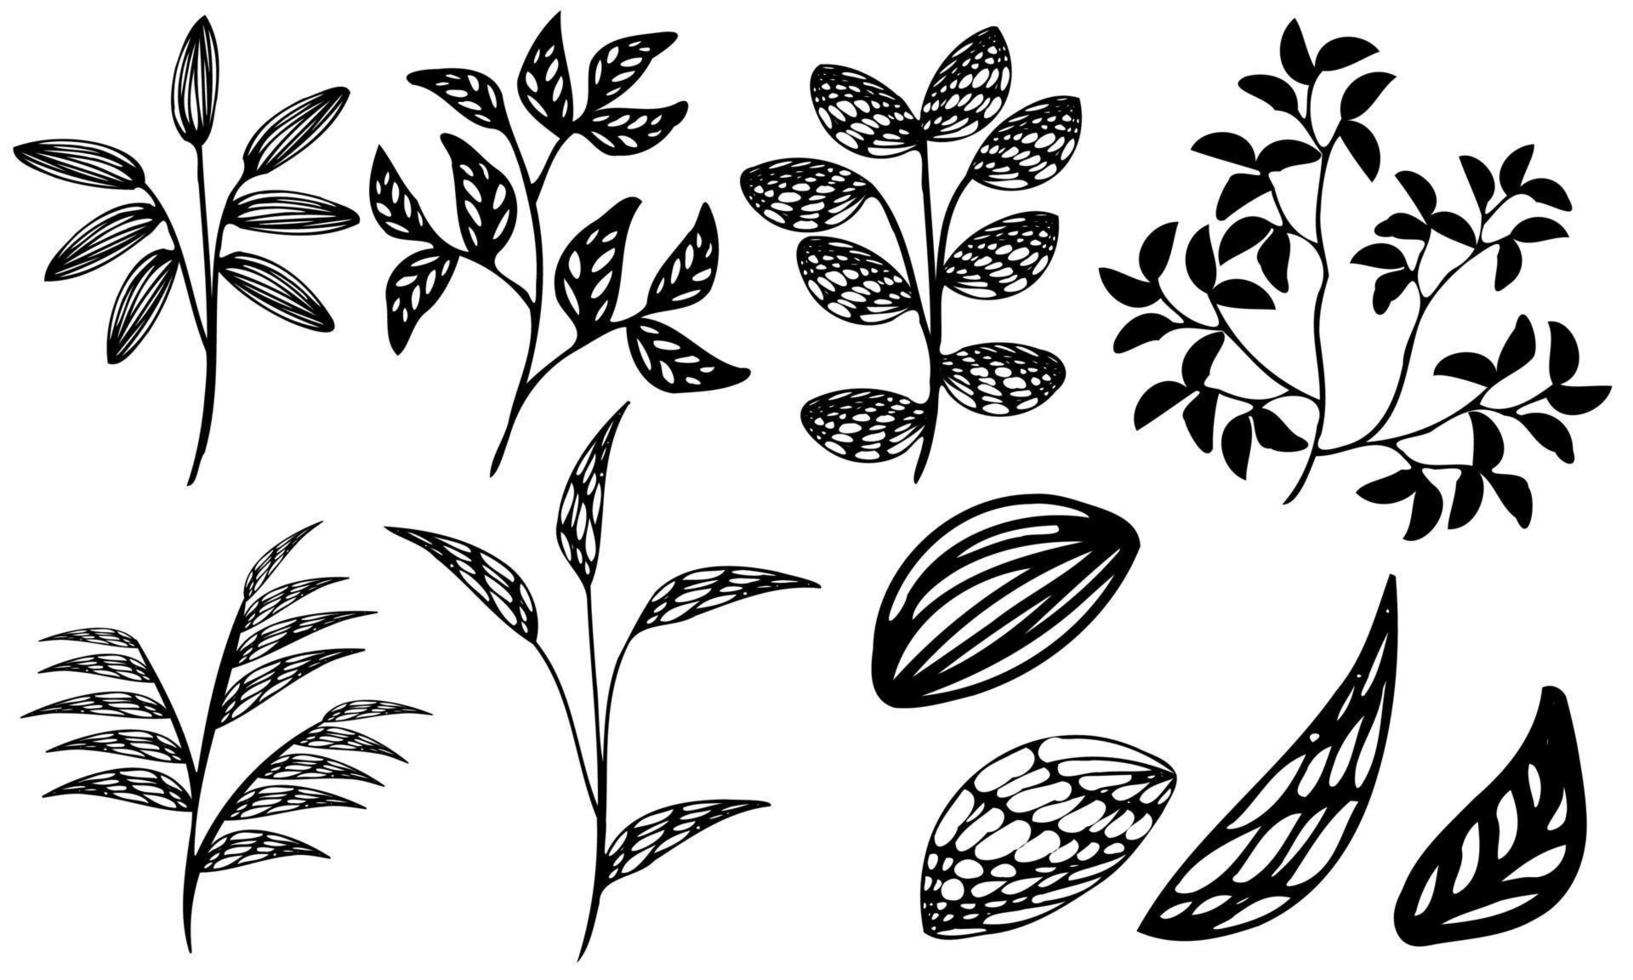 struik tekening zwart-wit bladeren, gebladerte silhouet, plant en tak vector